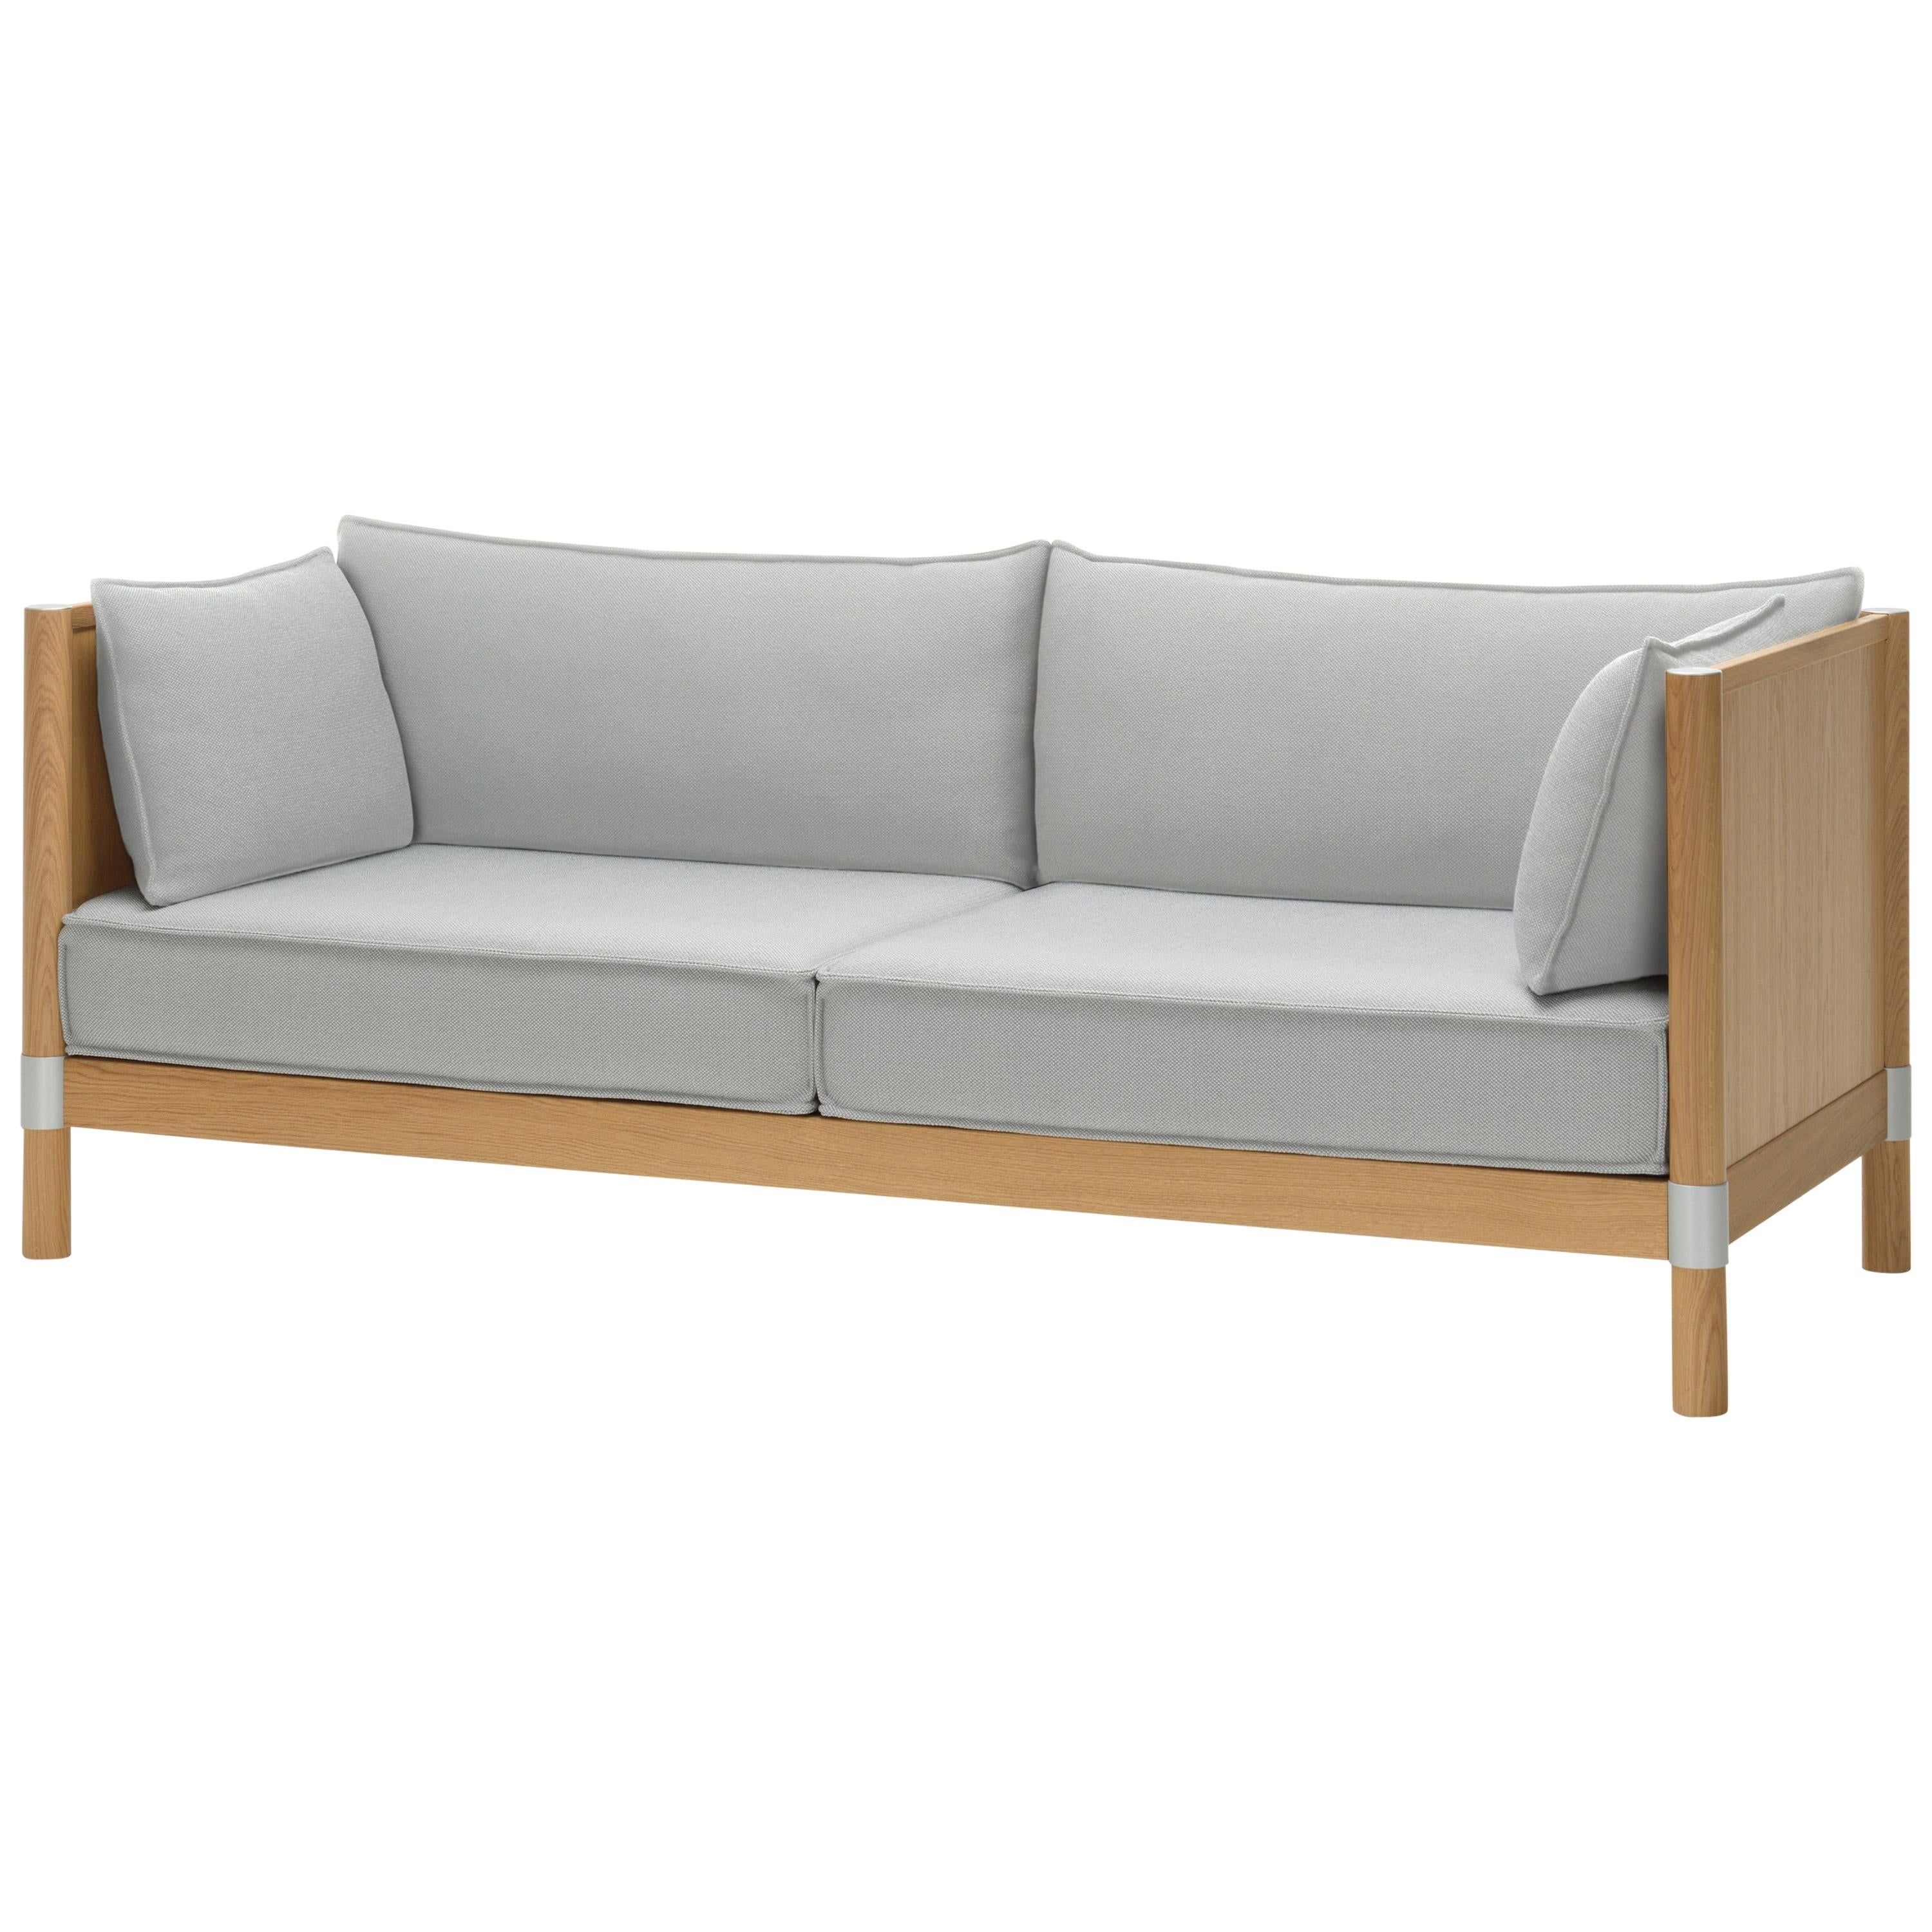 Vitra Cyl Wood Sofa in Cream & Sierra Grey Plano by Ronan & Erwan Bouroullec For Sale